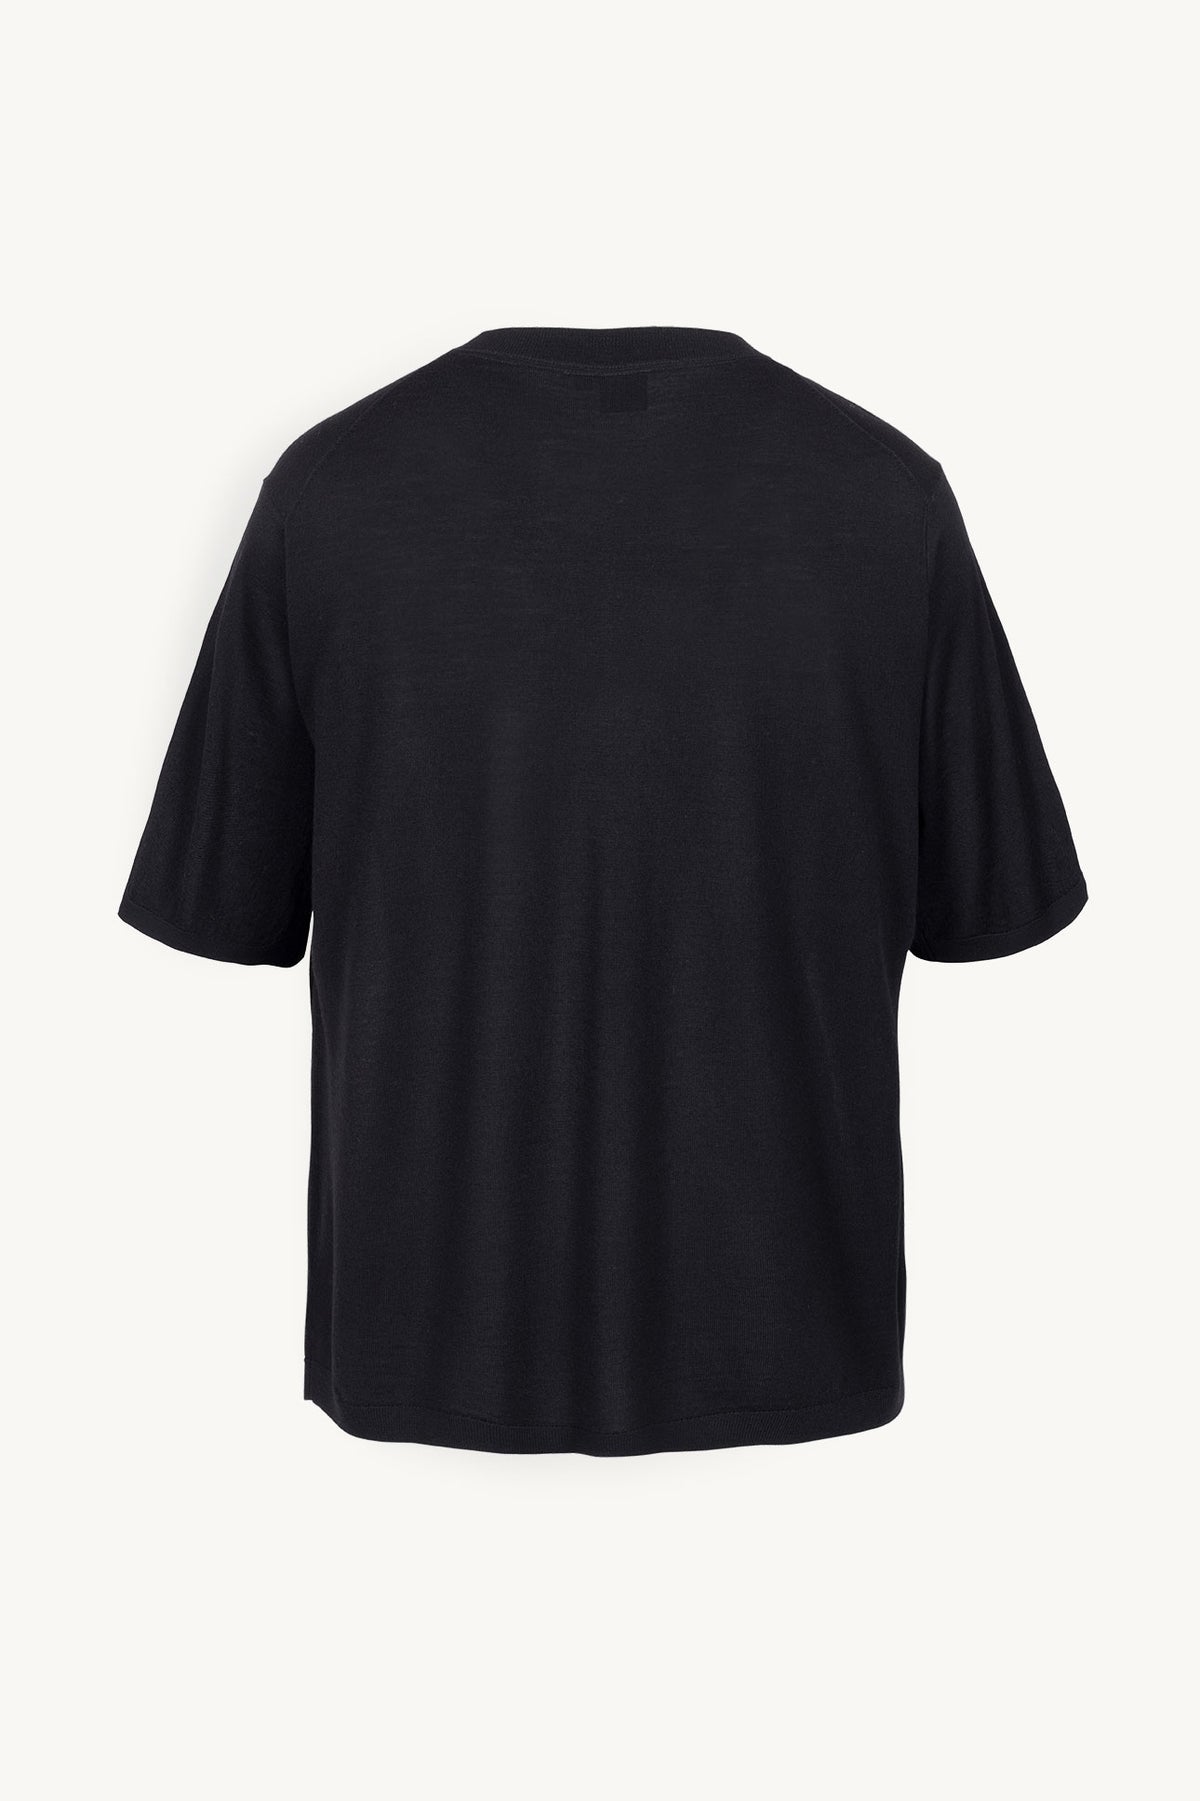 1van Ultrafine Merino T-Shirt